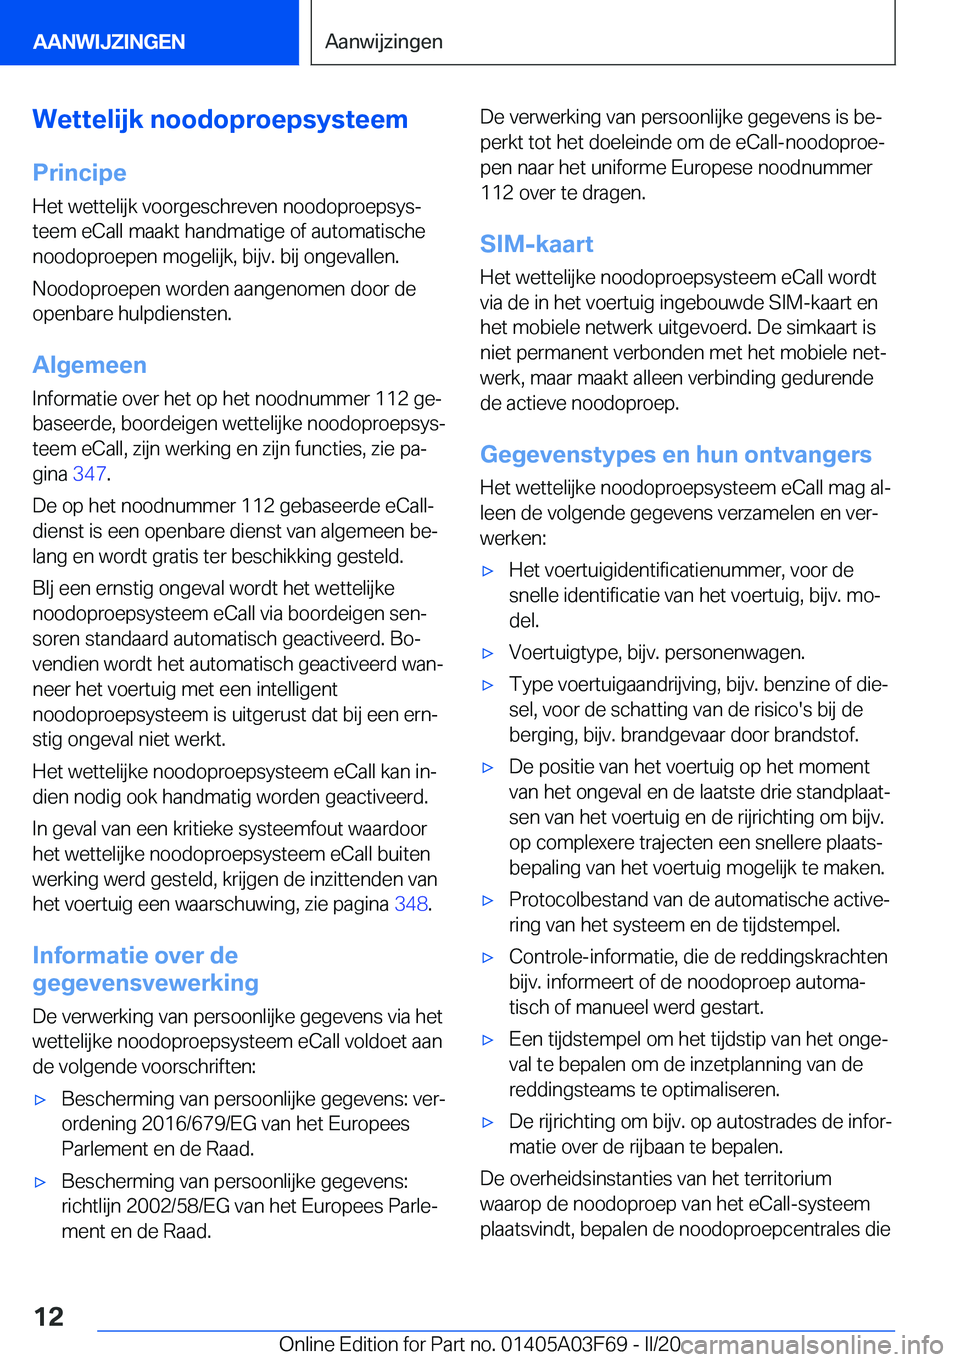 BMW 3 SERIES 2020  Instructieboekjes (in Dutch) �W�e�t�t�e�l�i�j�k��n�o�o�d�o�p�r�o�e�p�s�y�s�t�e�e�m
�P�r�i�n�c�i�p�e �H�e�t��w�e�t�t�e�l�i�j�k��v�o�o�r�g�e�s�c�h�r�e�v�e�n��n�o�o�d�o�p�r�o�e�p�s�y�sj
�t�e�e�m��e�C�a�l�l��m�a�a�k�t��h�a�n�